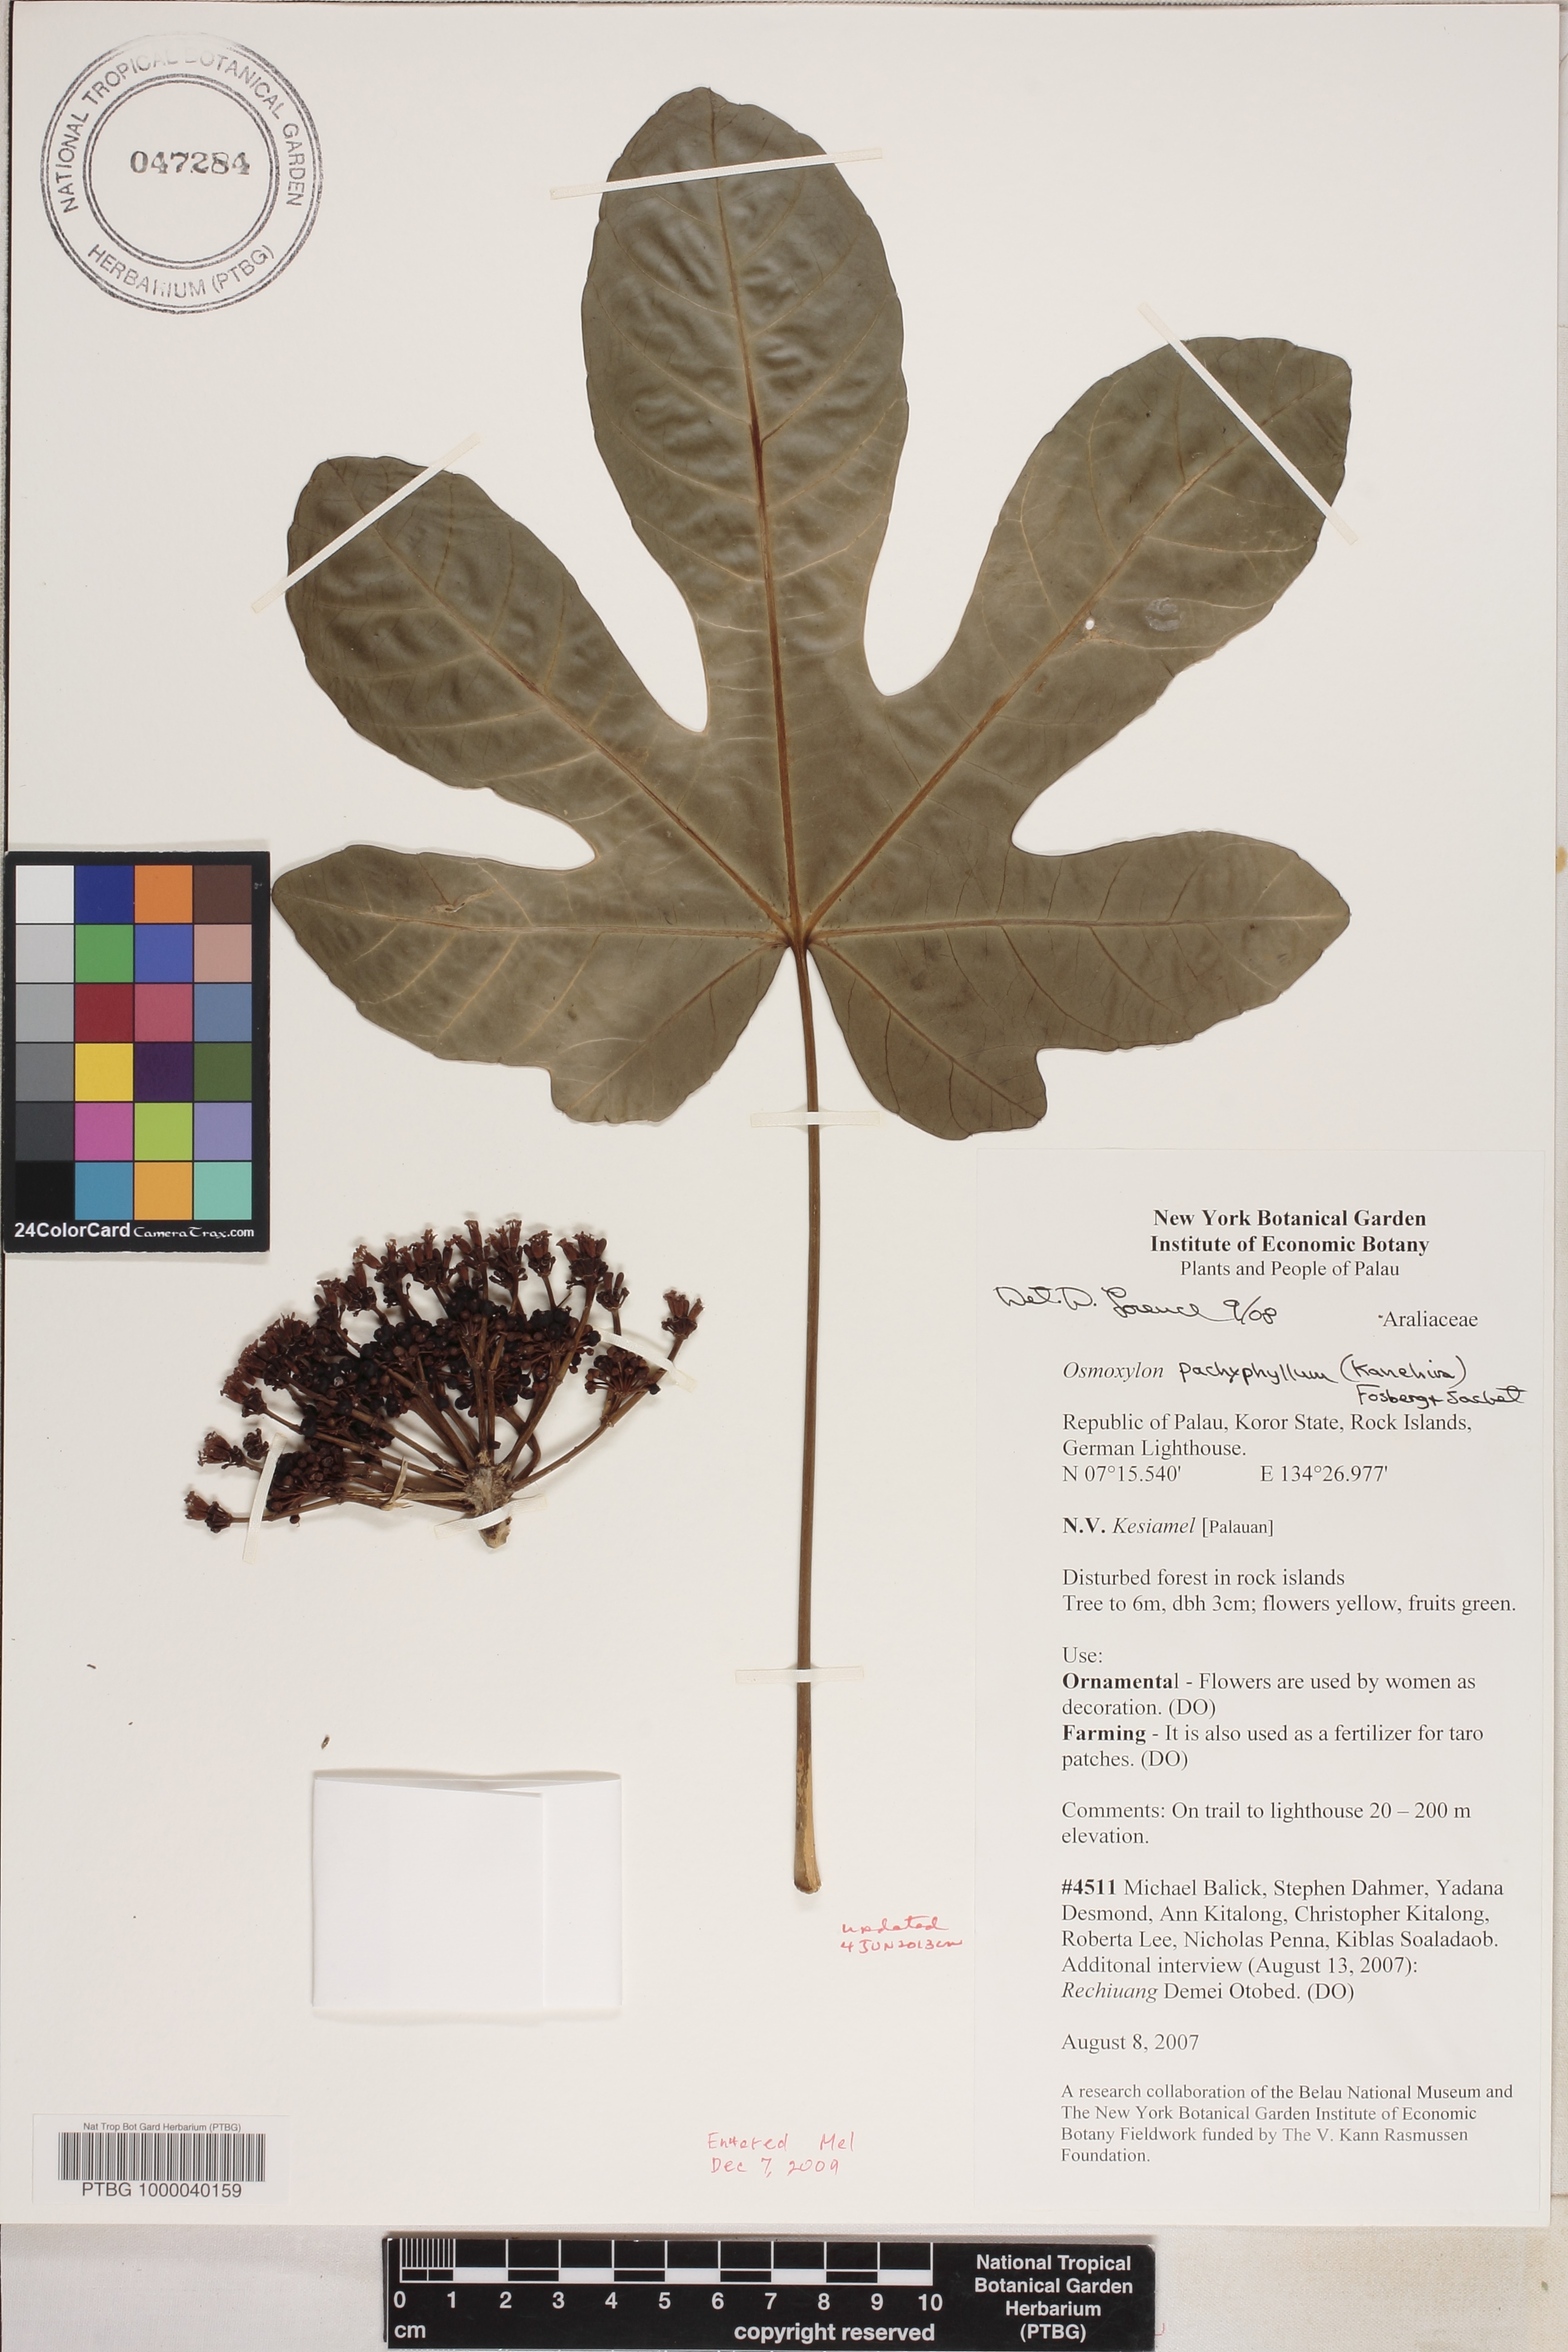 Osmoxylon pachyphyllum image